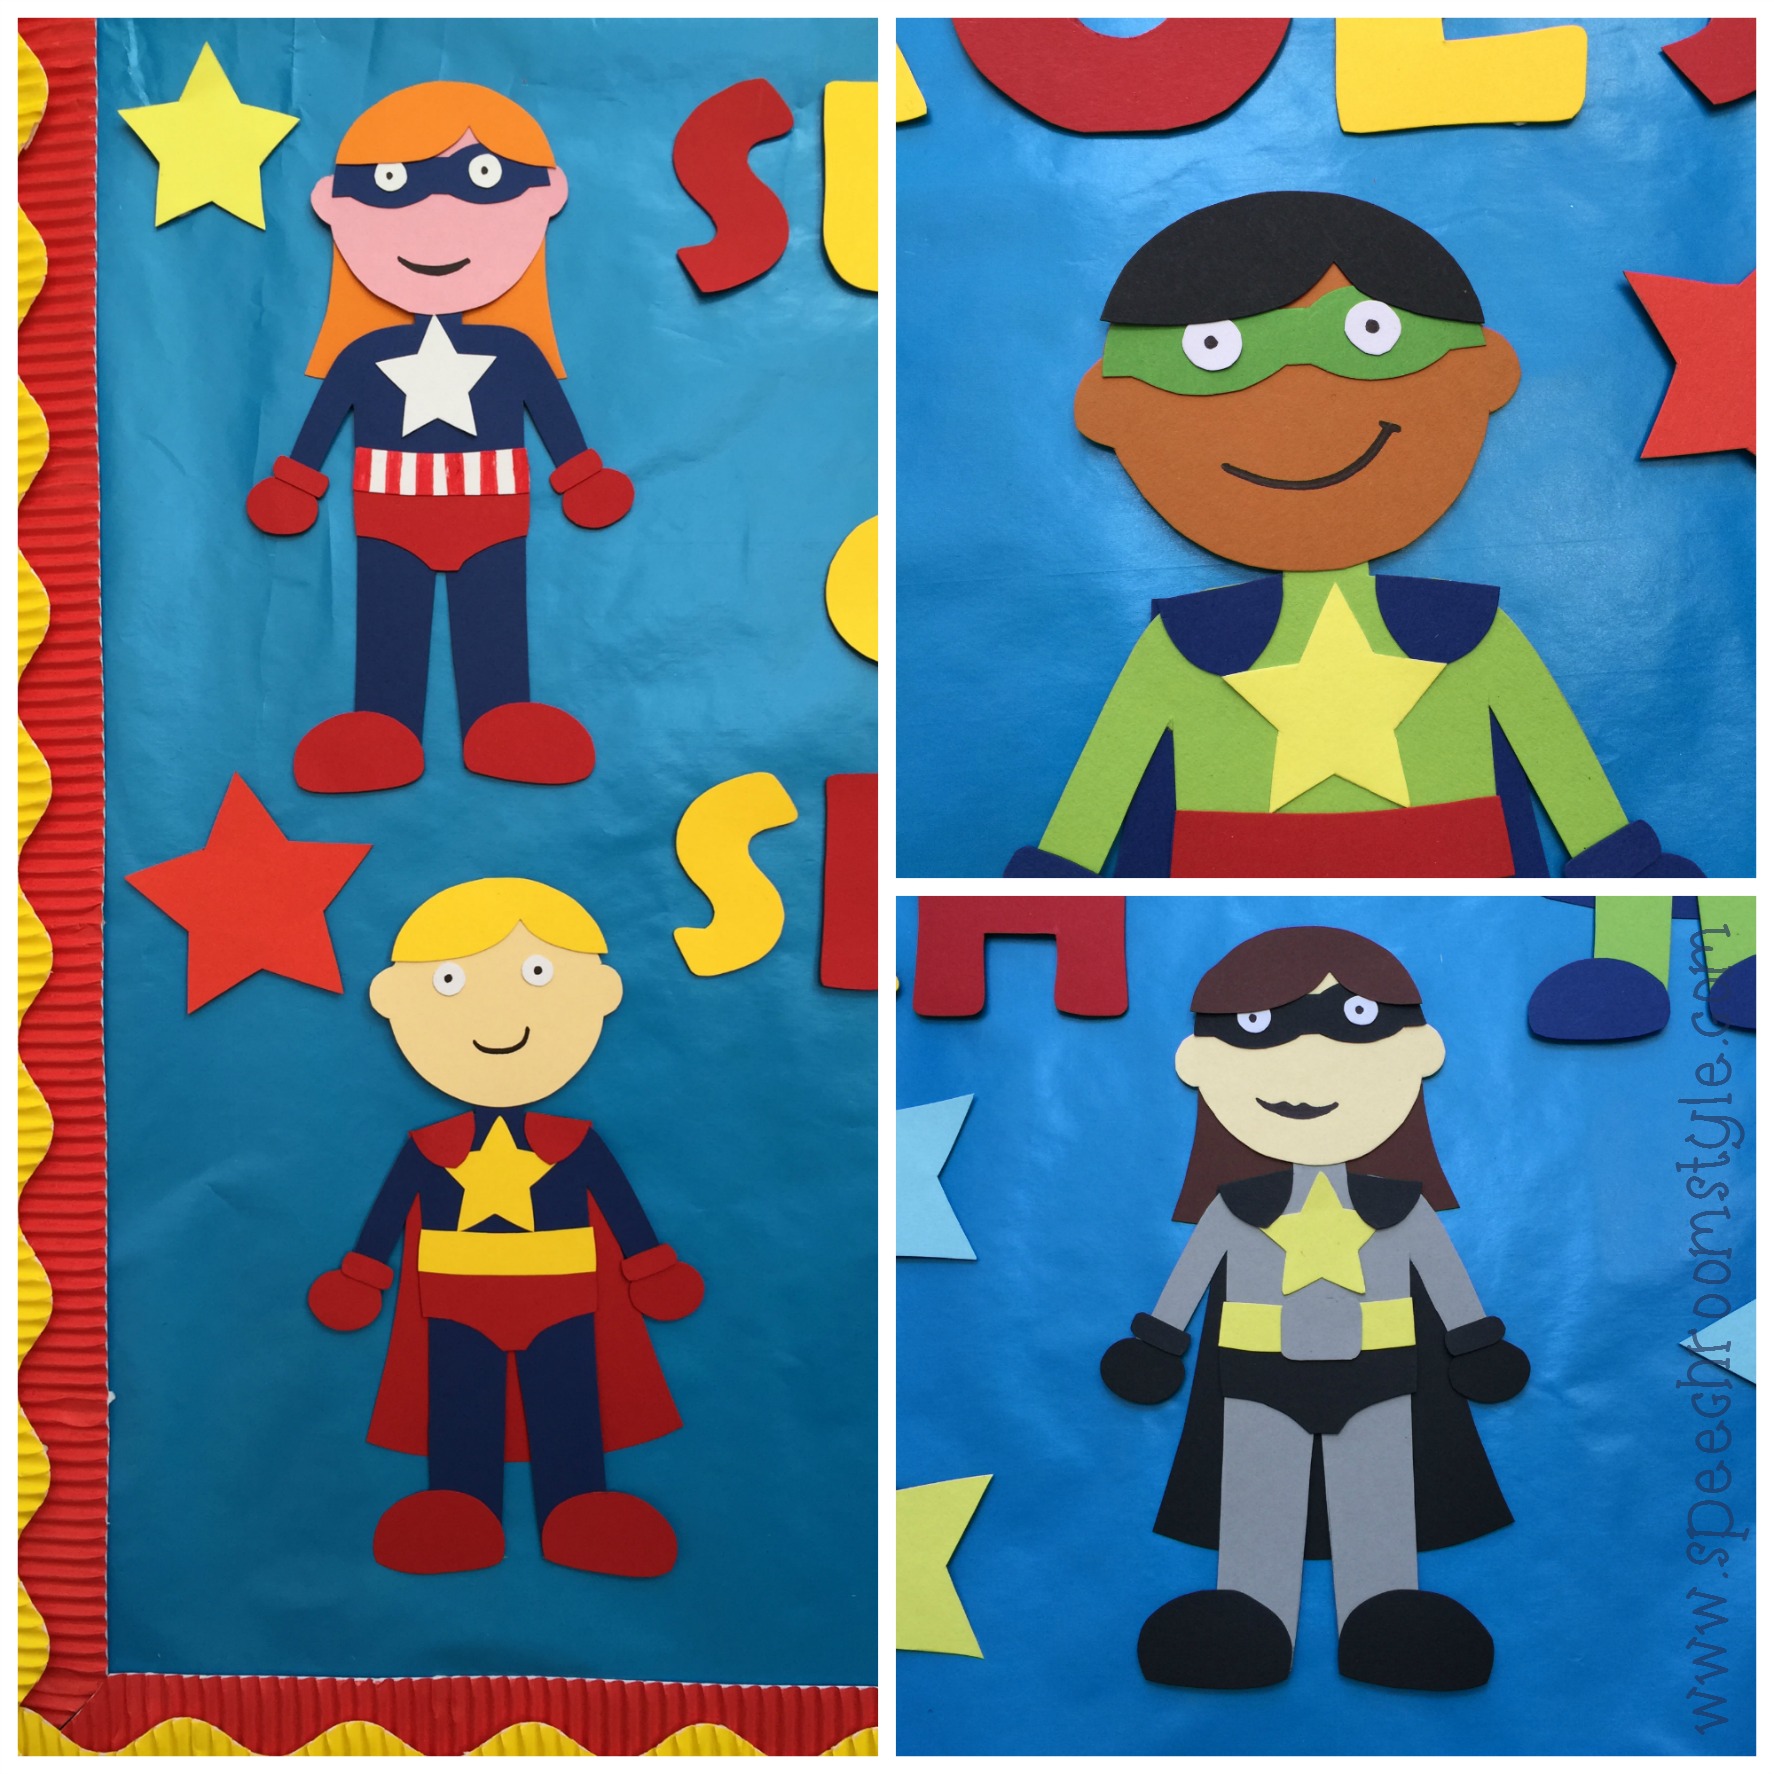 Superhero Bulletin Board Speech Room Style